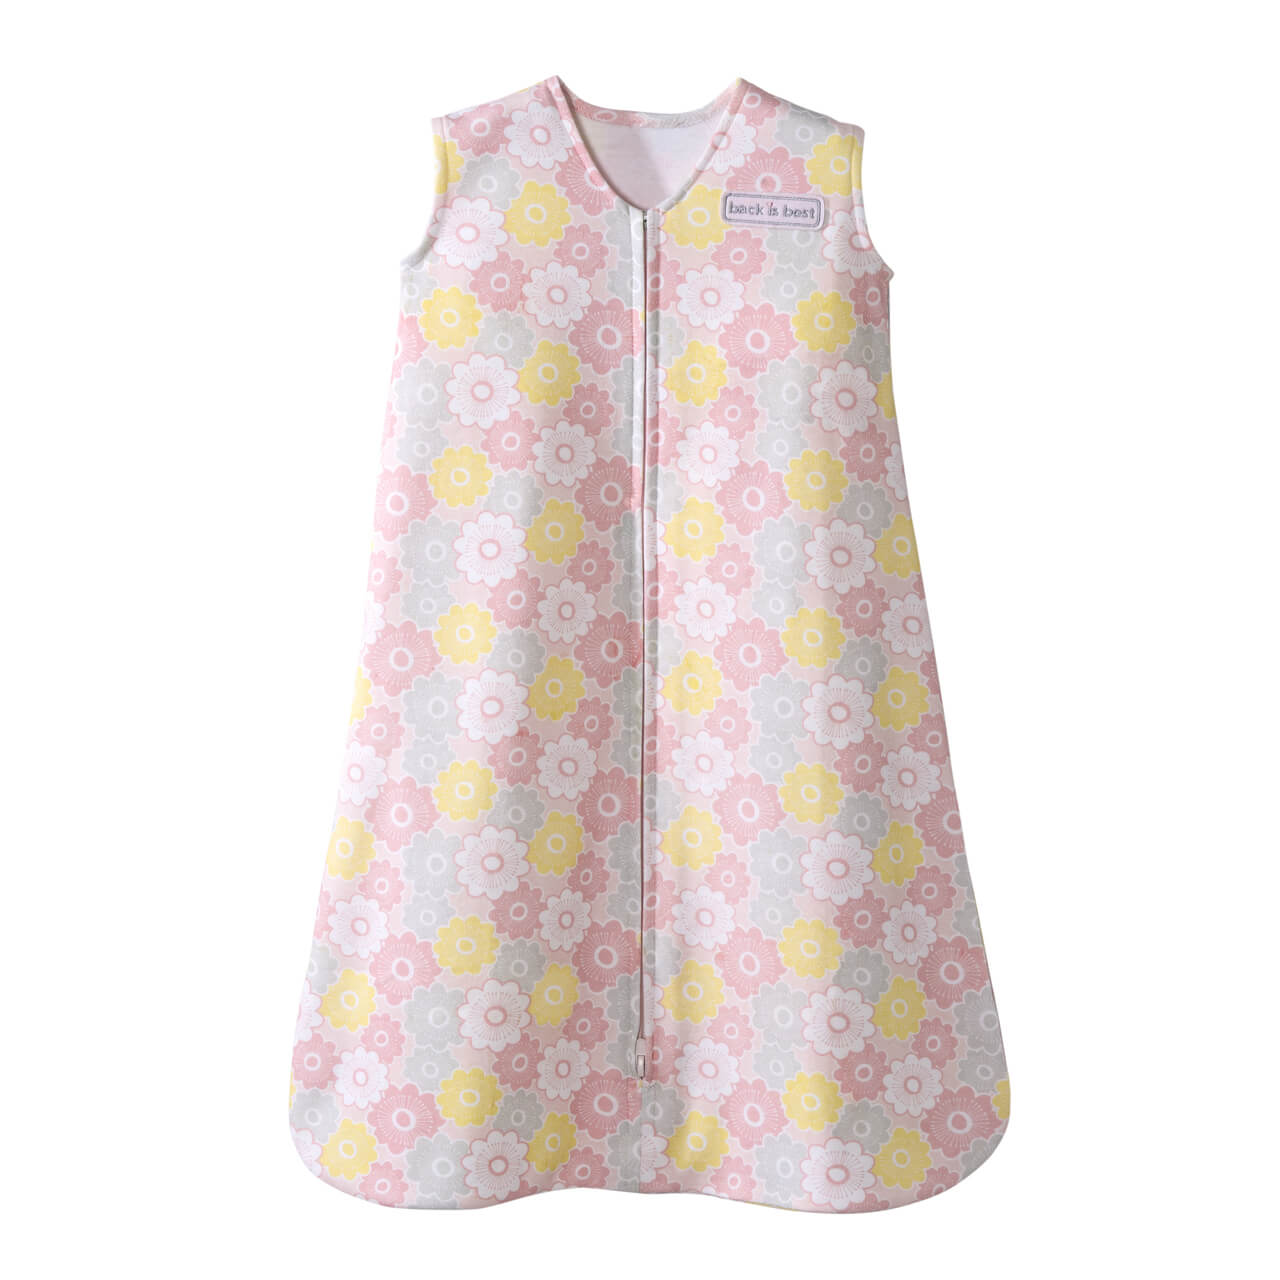 Halo Sleepsack Wearable Blanket – Gray Pink Flowers – Tickled Babies